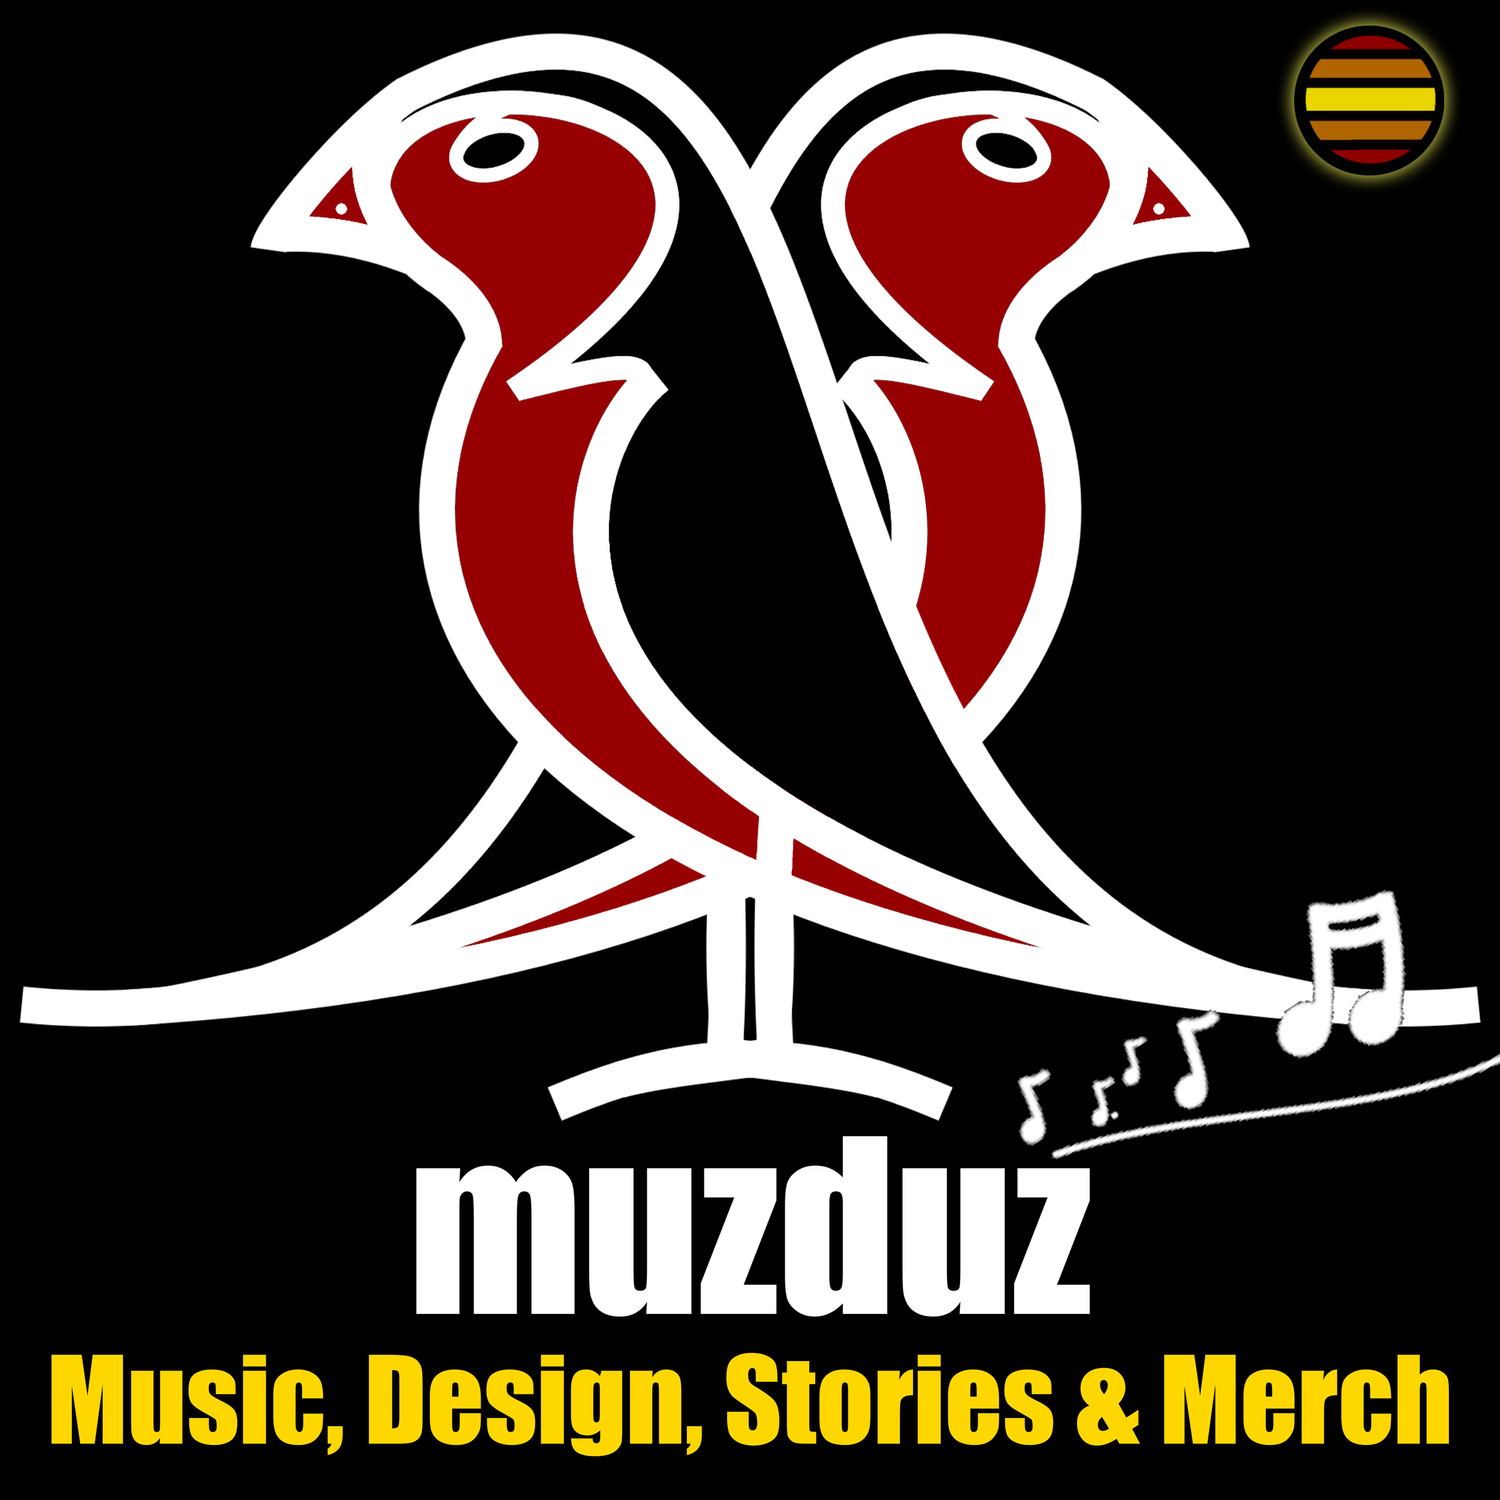 Muzduz - Music, stories, design and more..